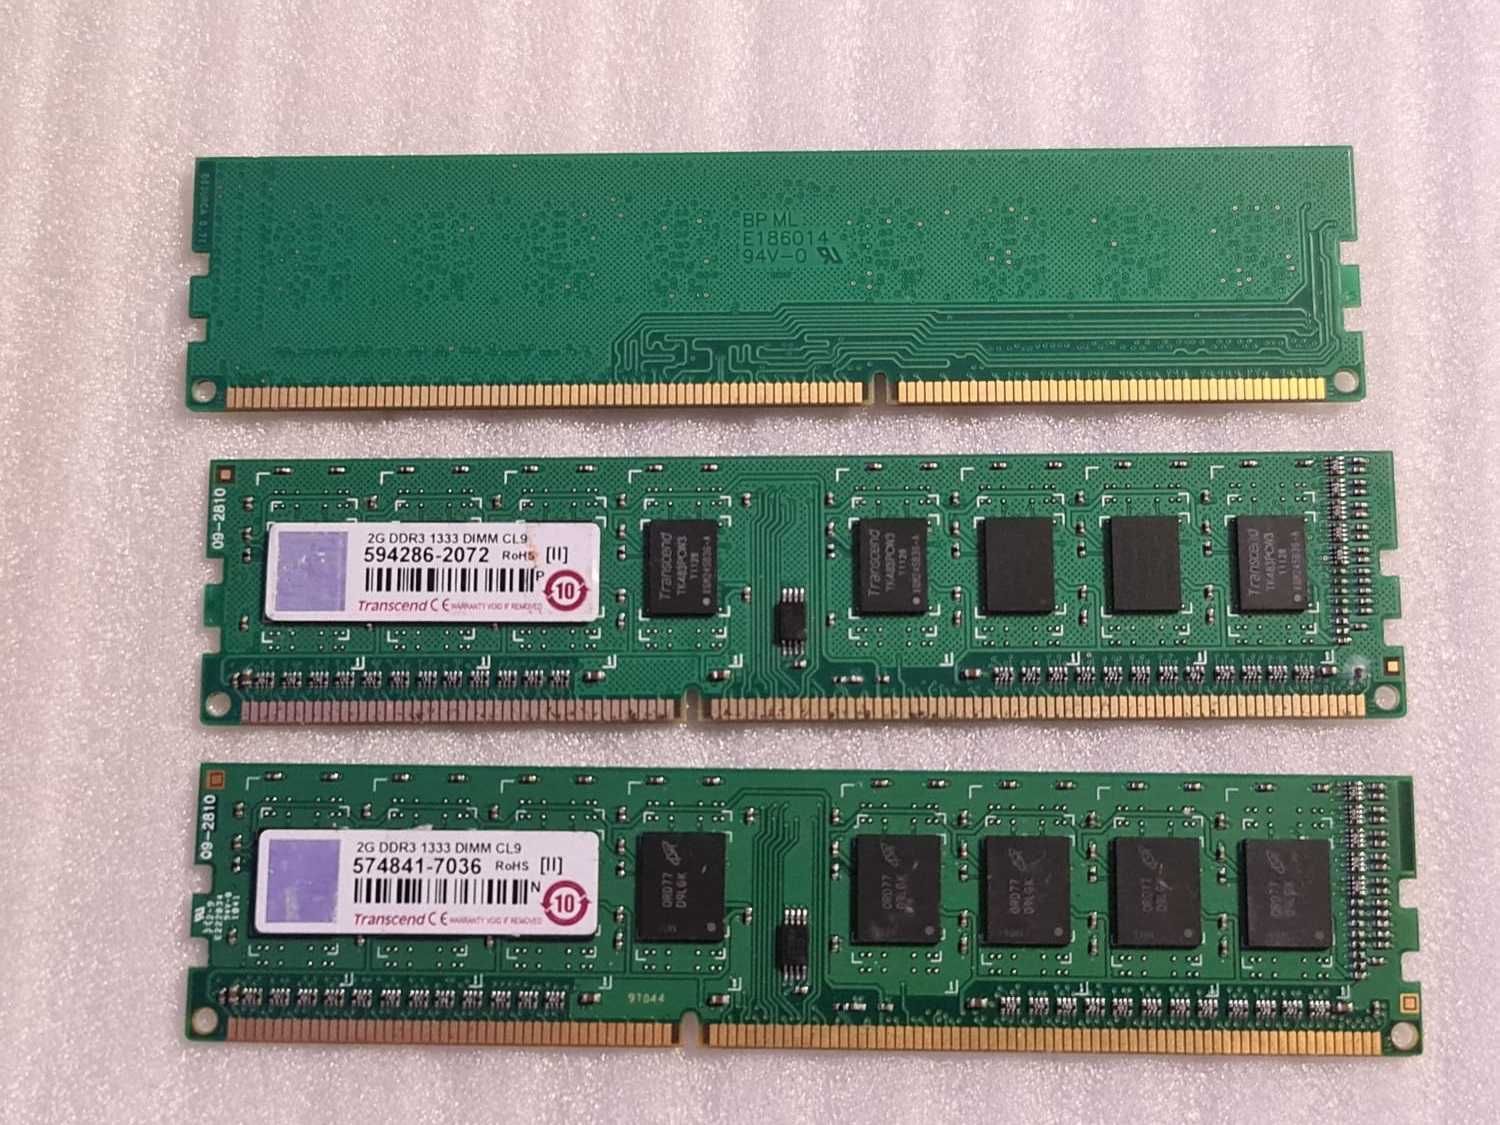 Memorie RAM desktop Transcend 2GB DDR3-1333MHz - poze reale